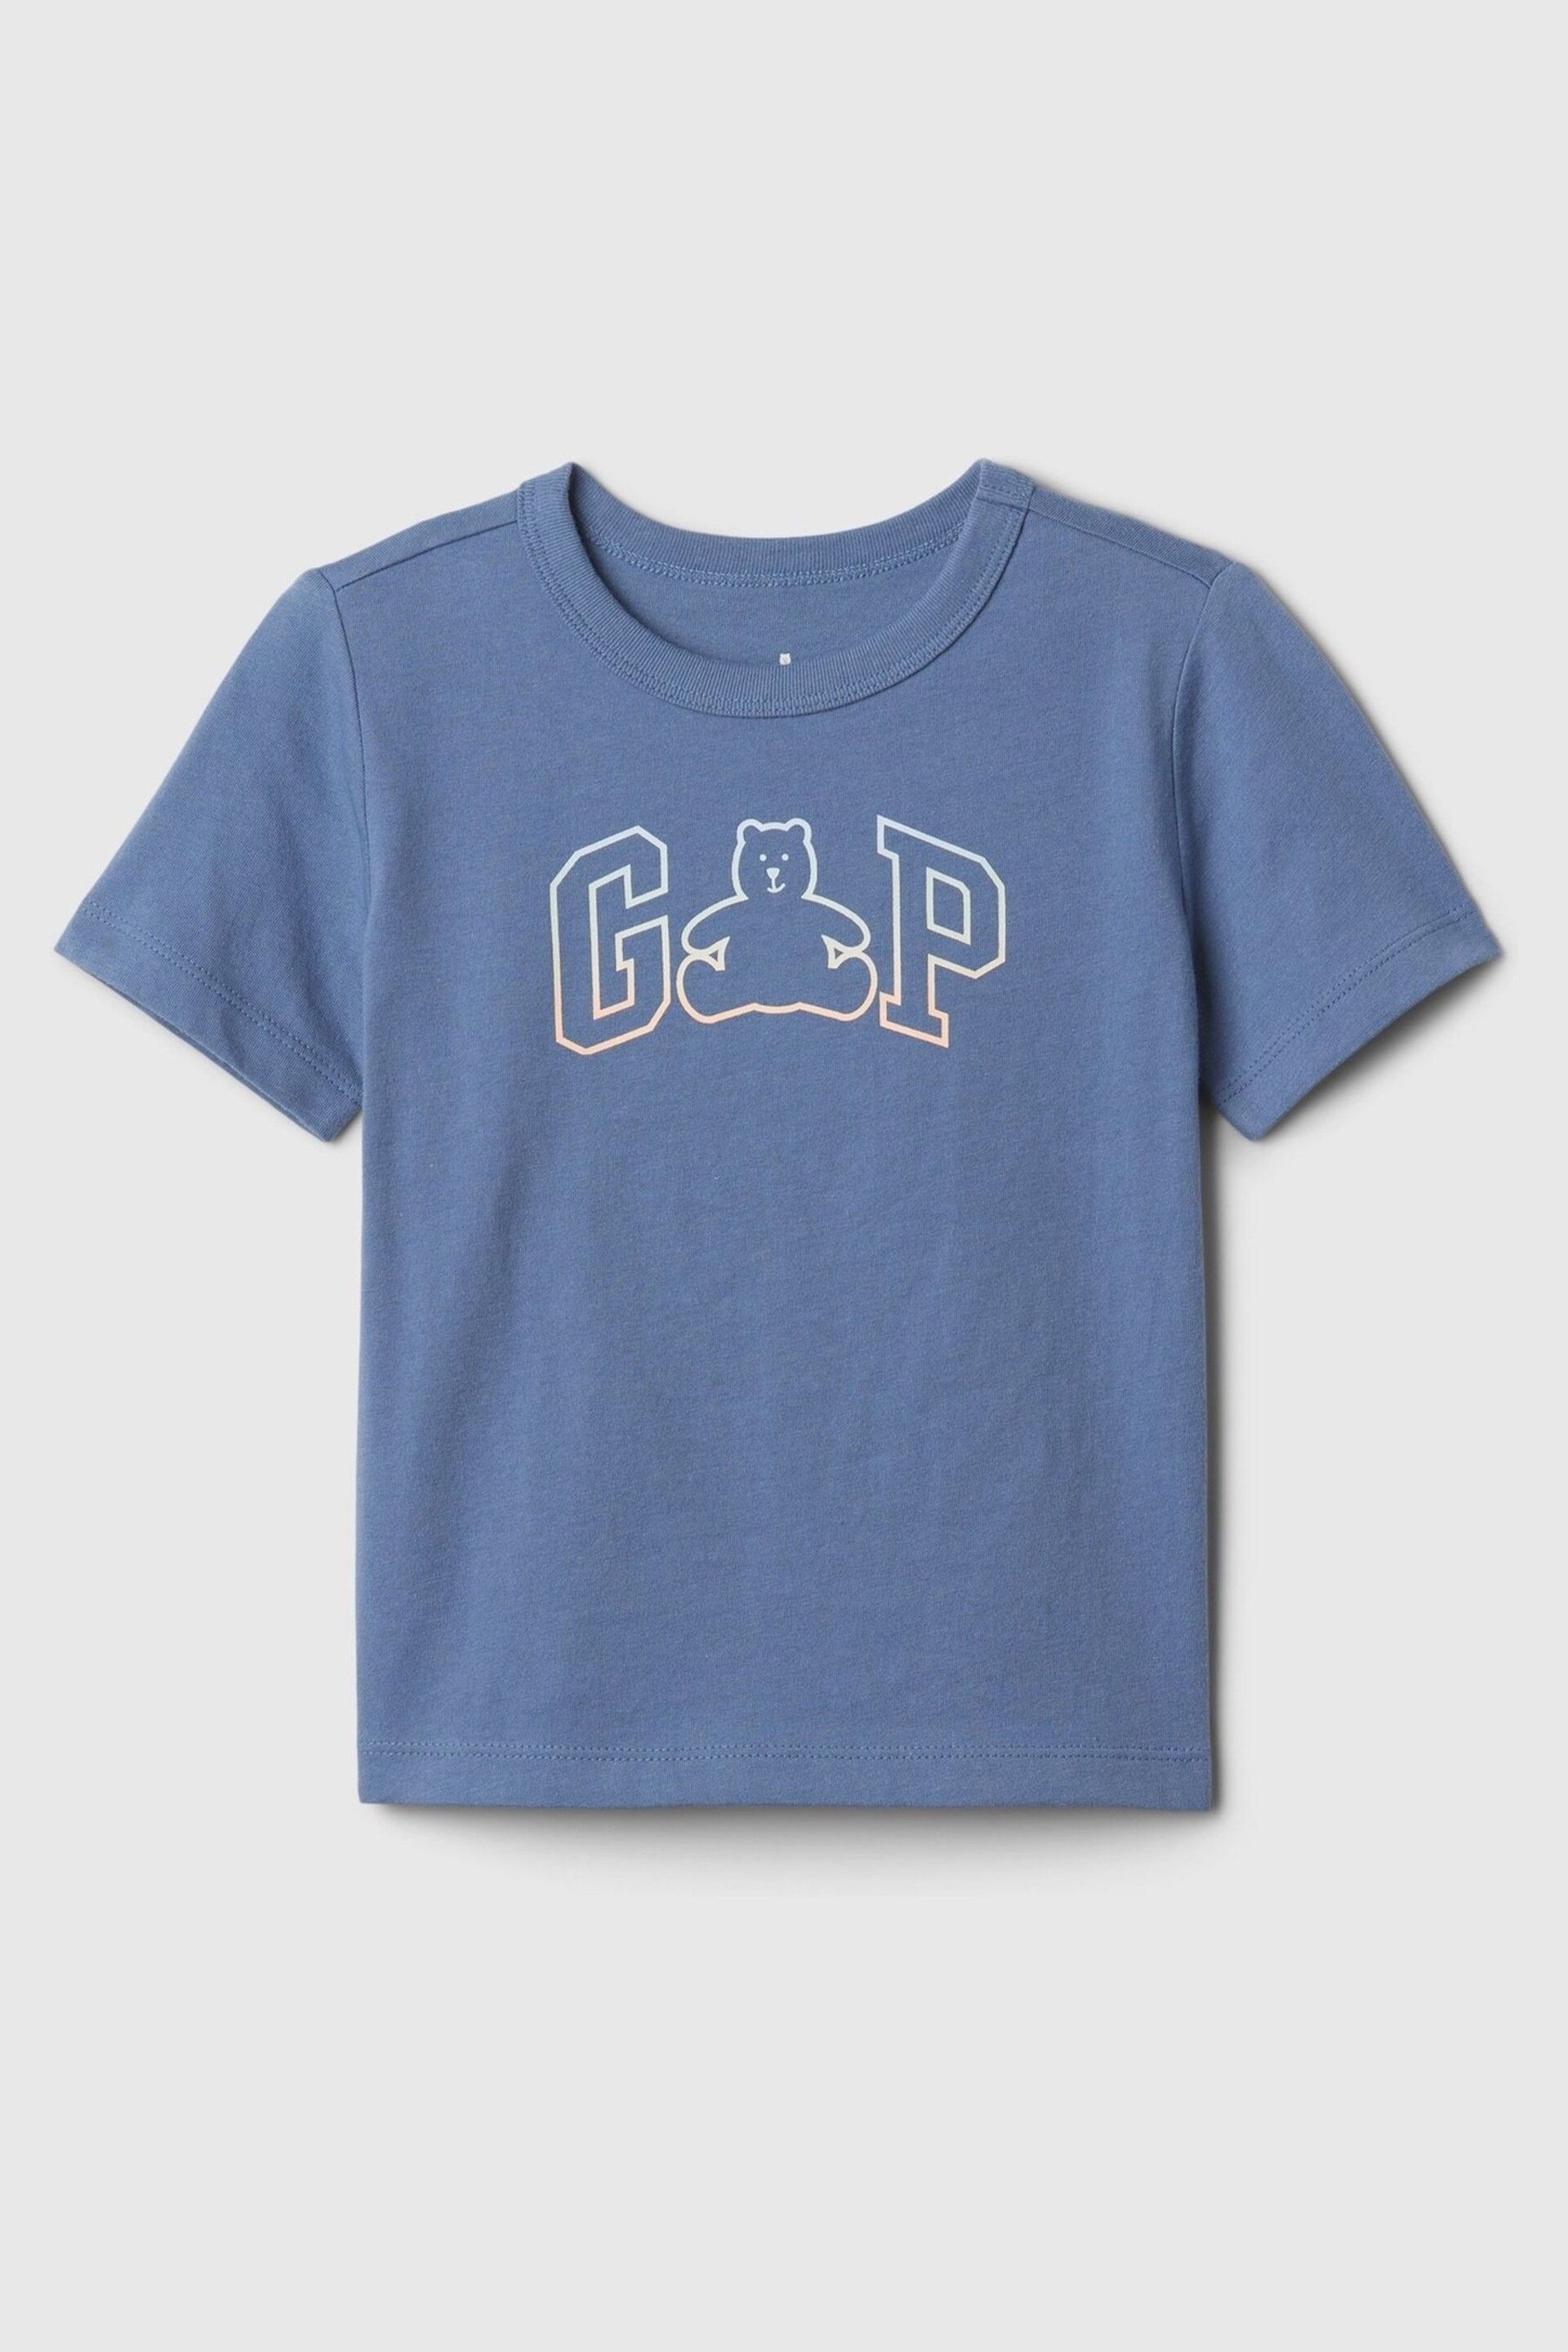 Gap Blue Branan Bear Graphic Logo Short Sleeve Crew Neck T-Shirt (Newborn-5yrs) - Image 1 of 2